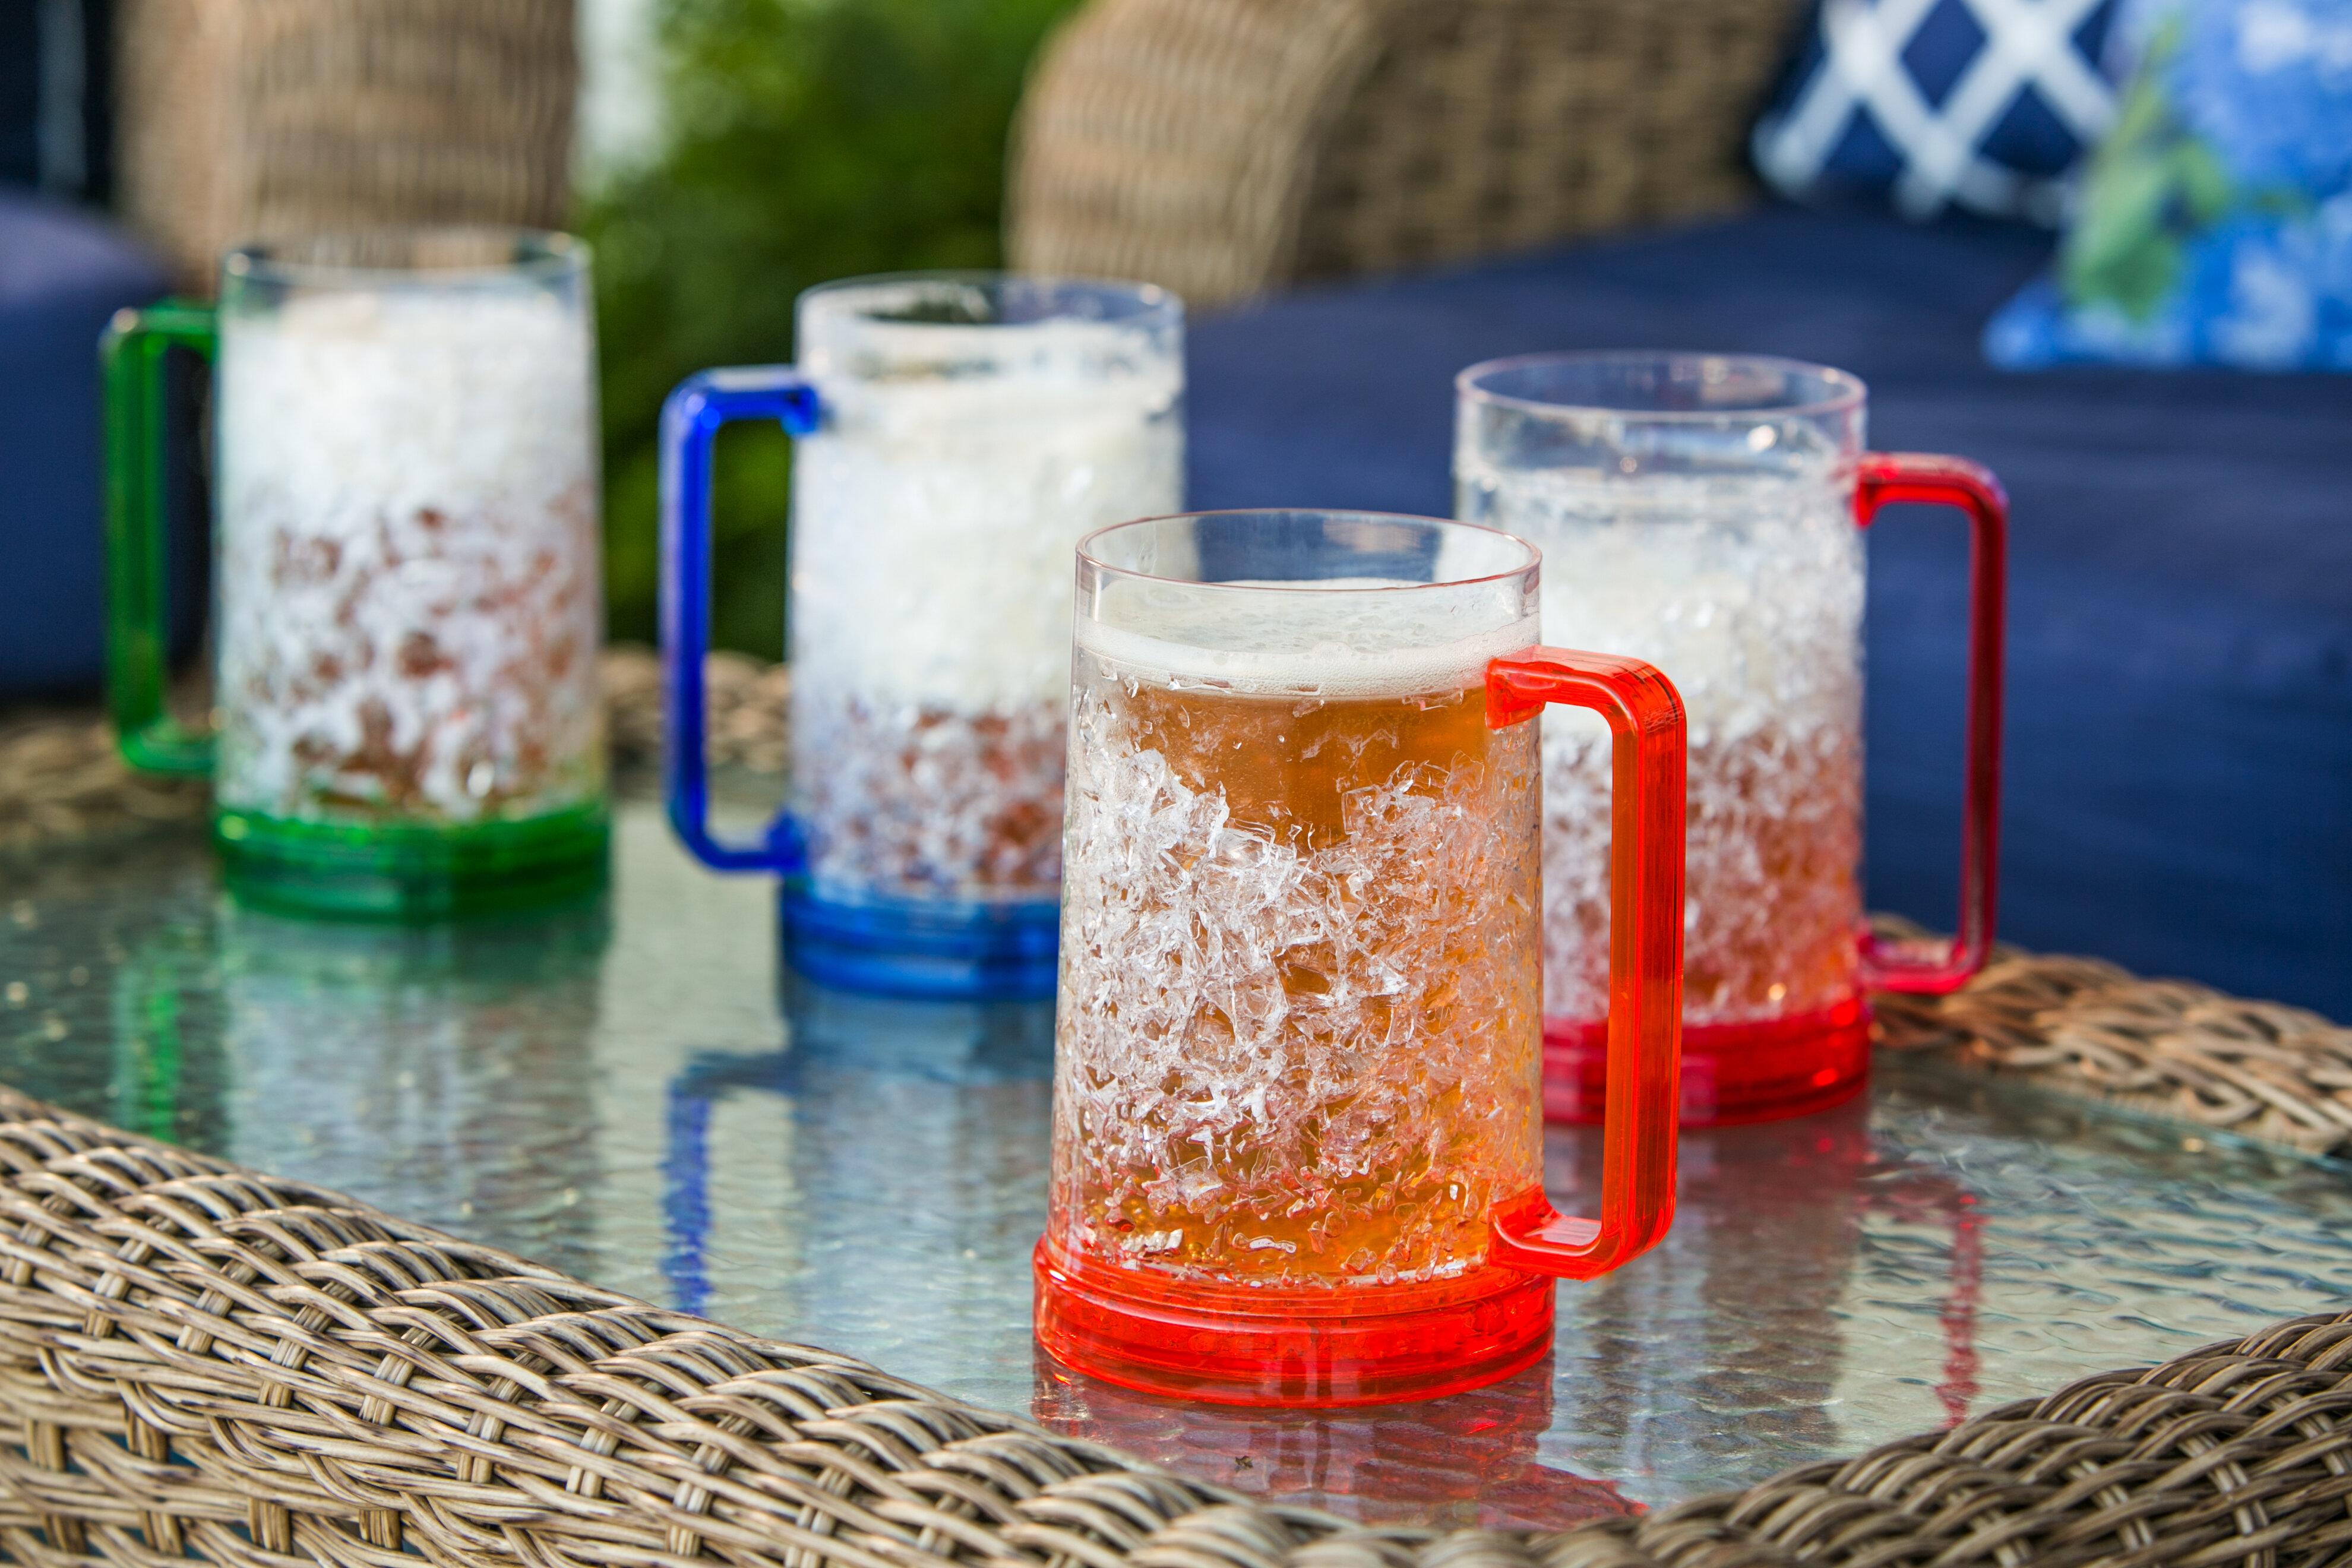 Freezable Beer Glasses